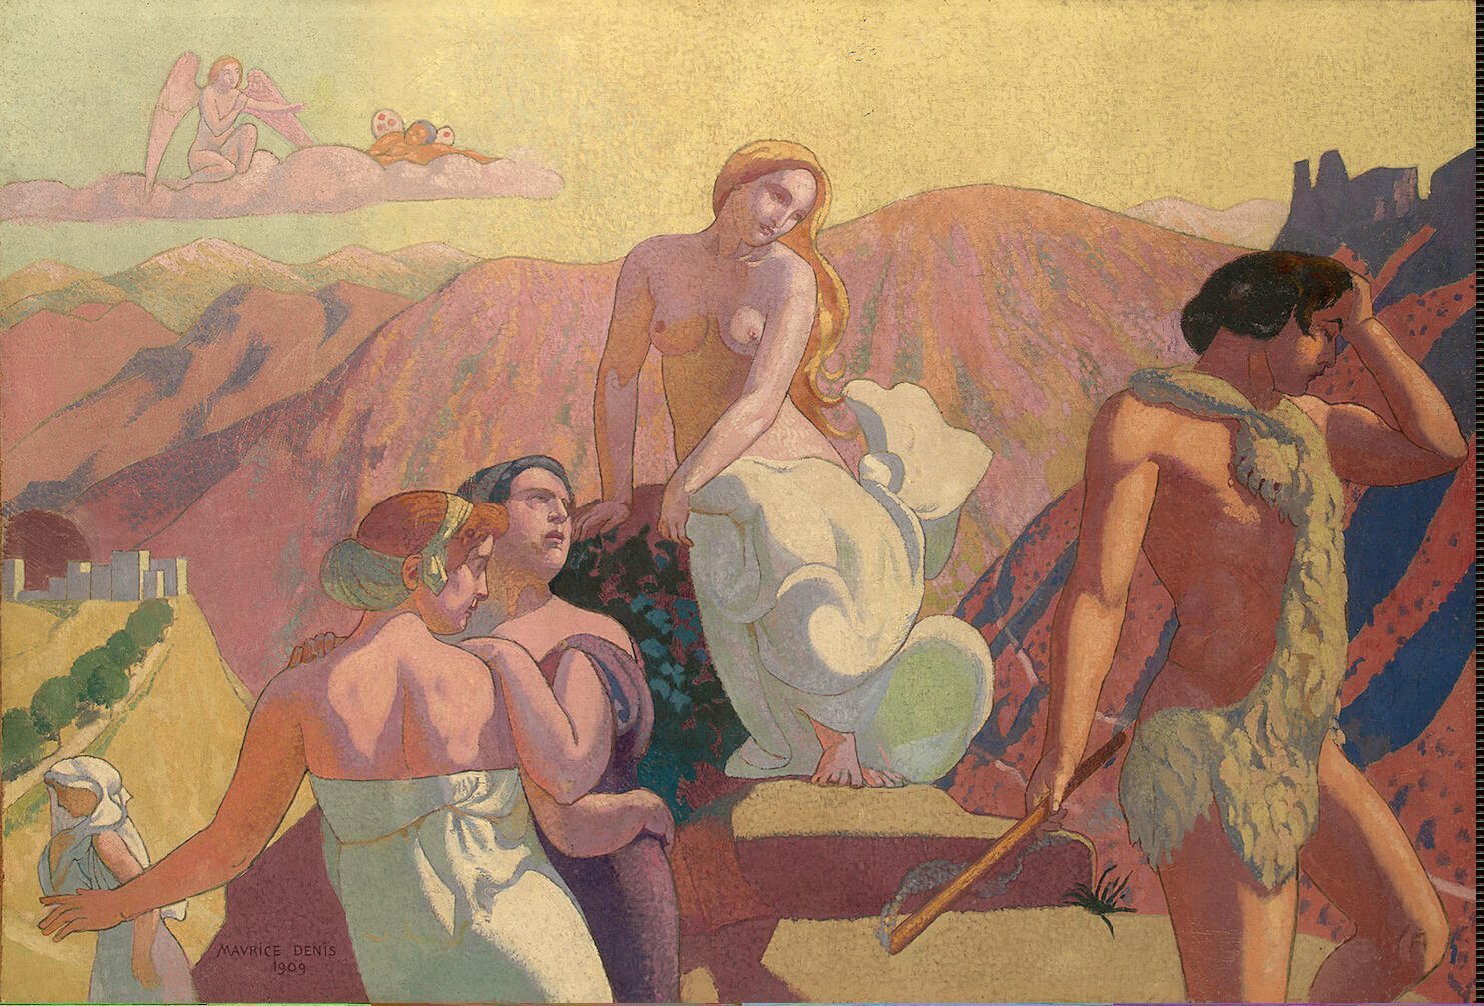 Panel 6 Psyche's kin bid her farewell on a mountain top, 1908